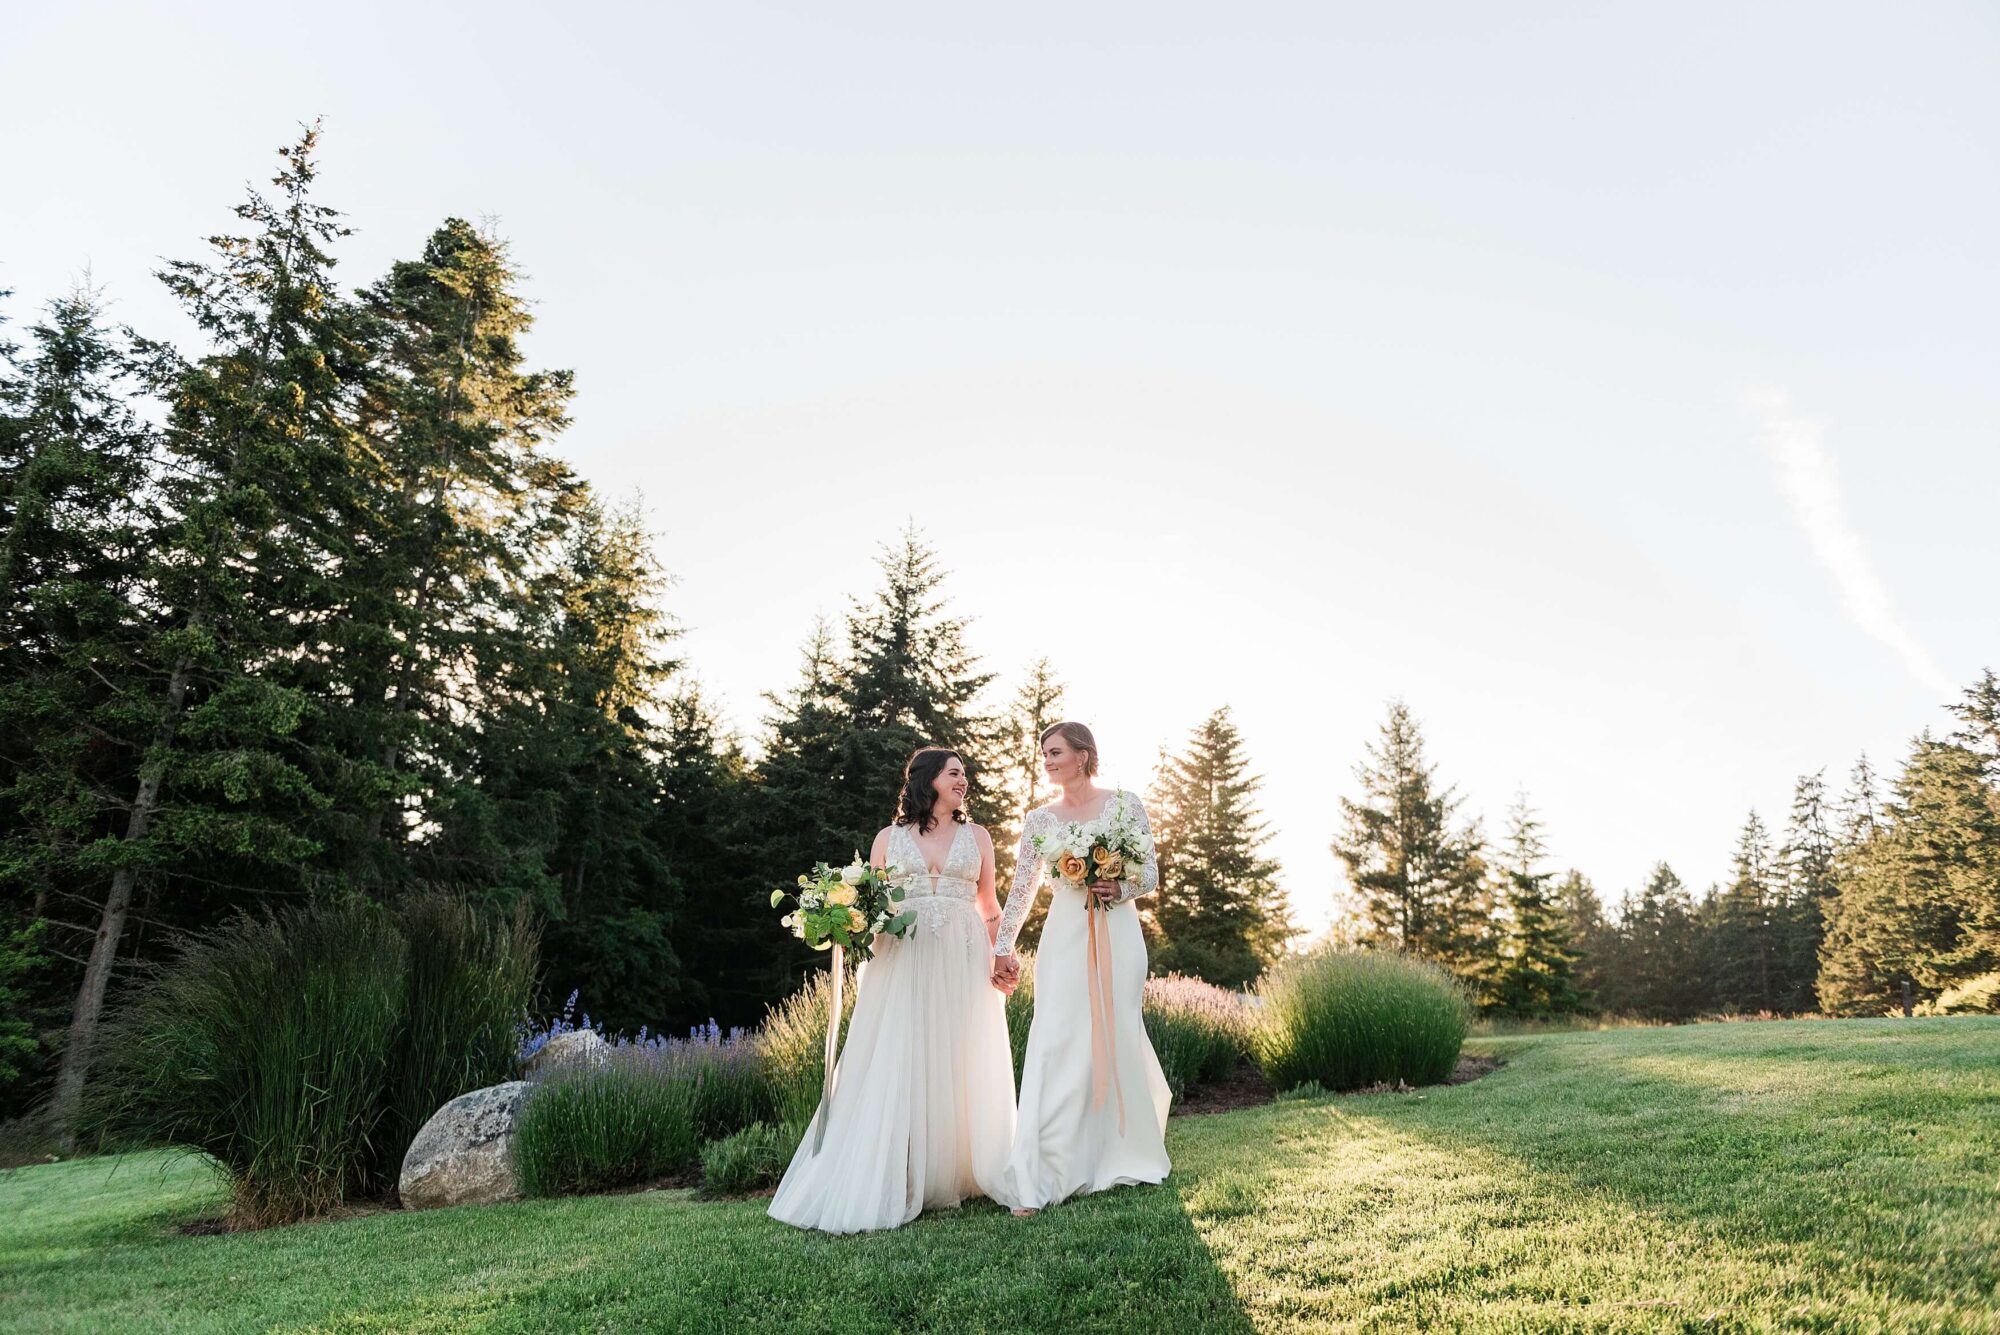 Two stunning brides at a a LGTBQ+ wedding at Saltwater Farm on San Juan Island